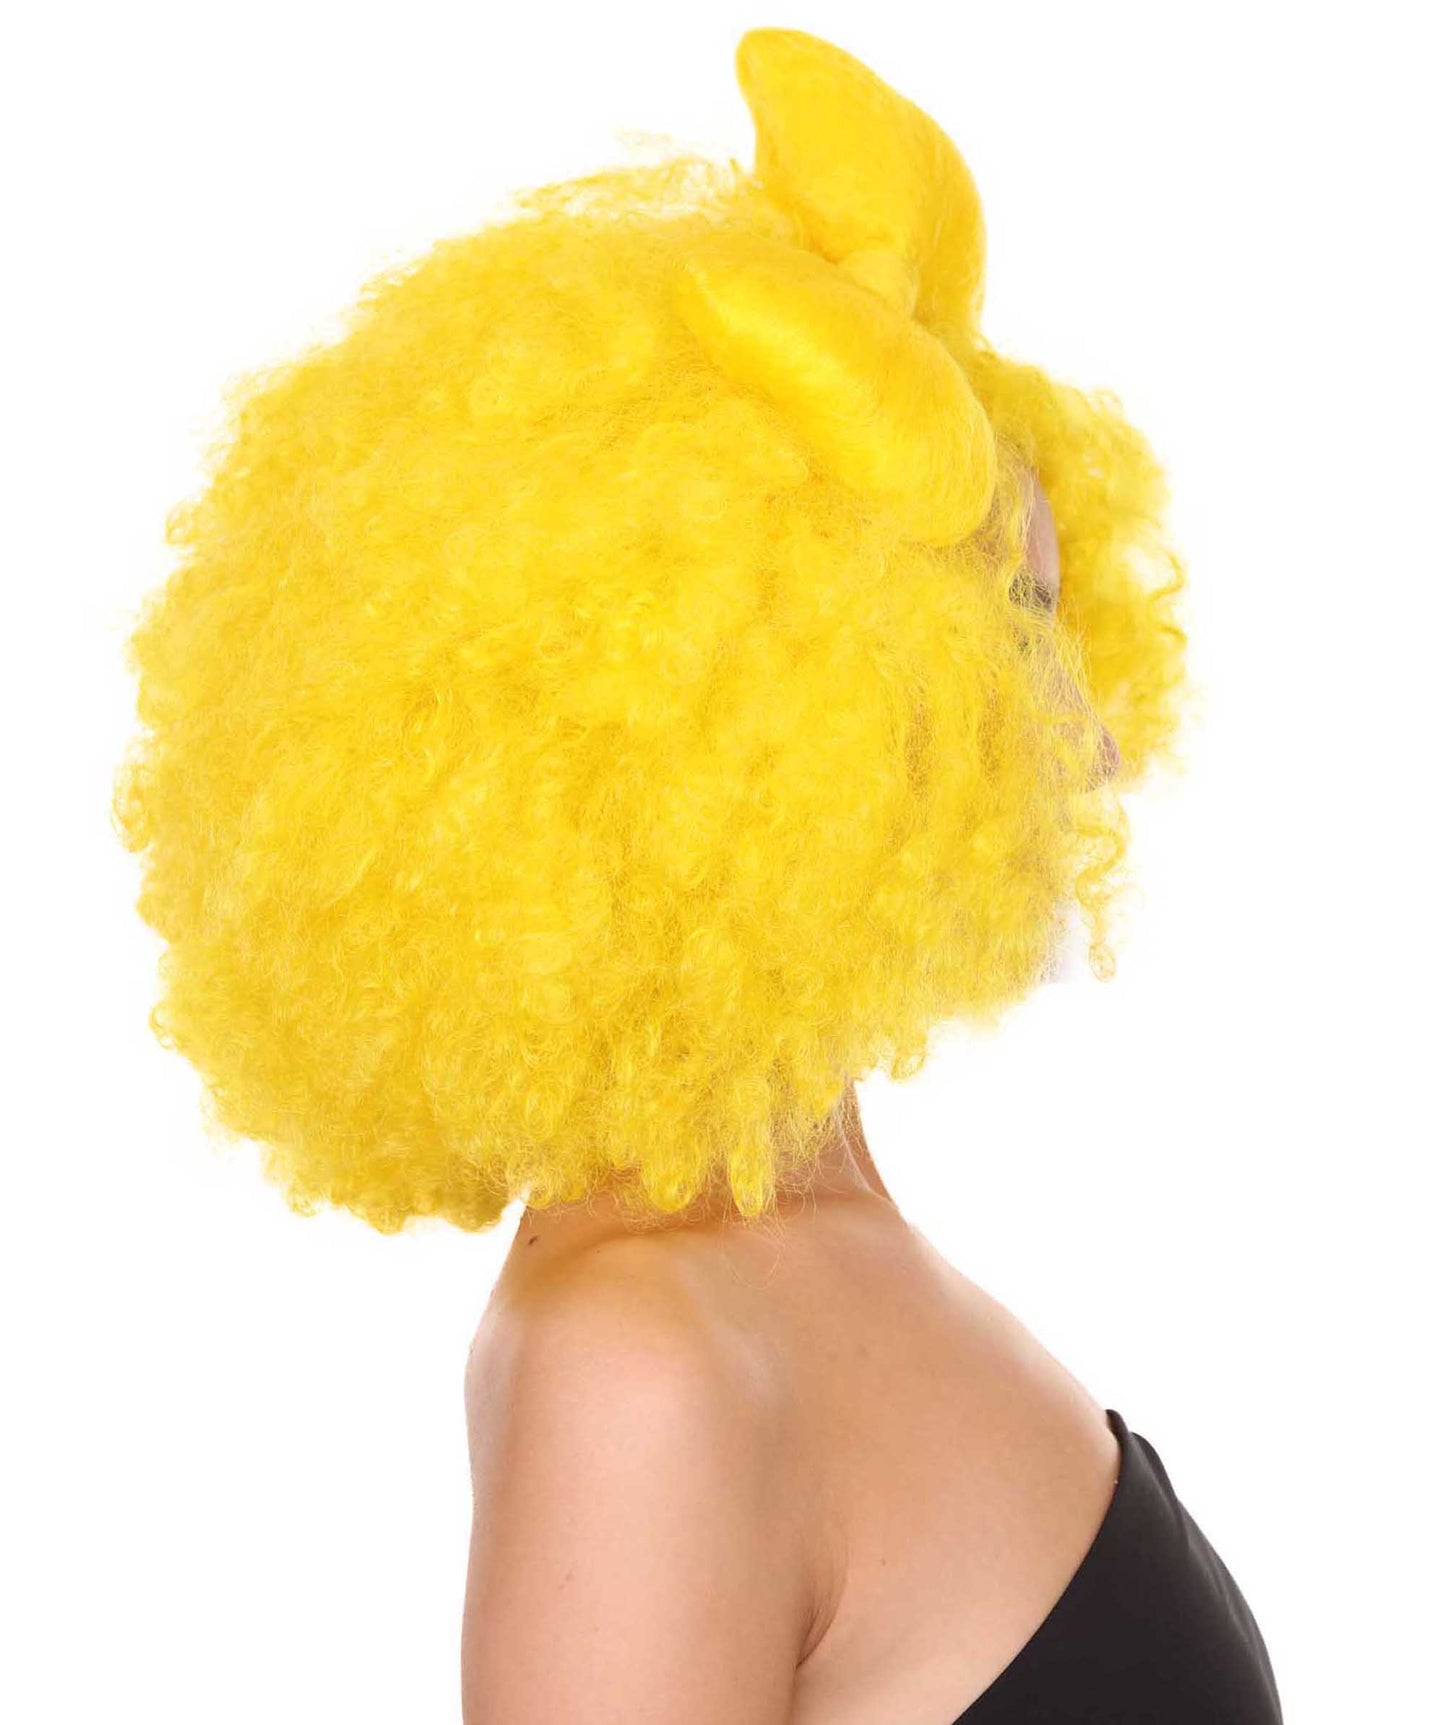 Lemon Wig | Super Size Jumbo Halloween Wig | Premium Breathable Capless Cap